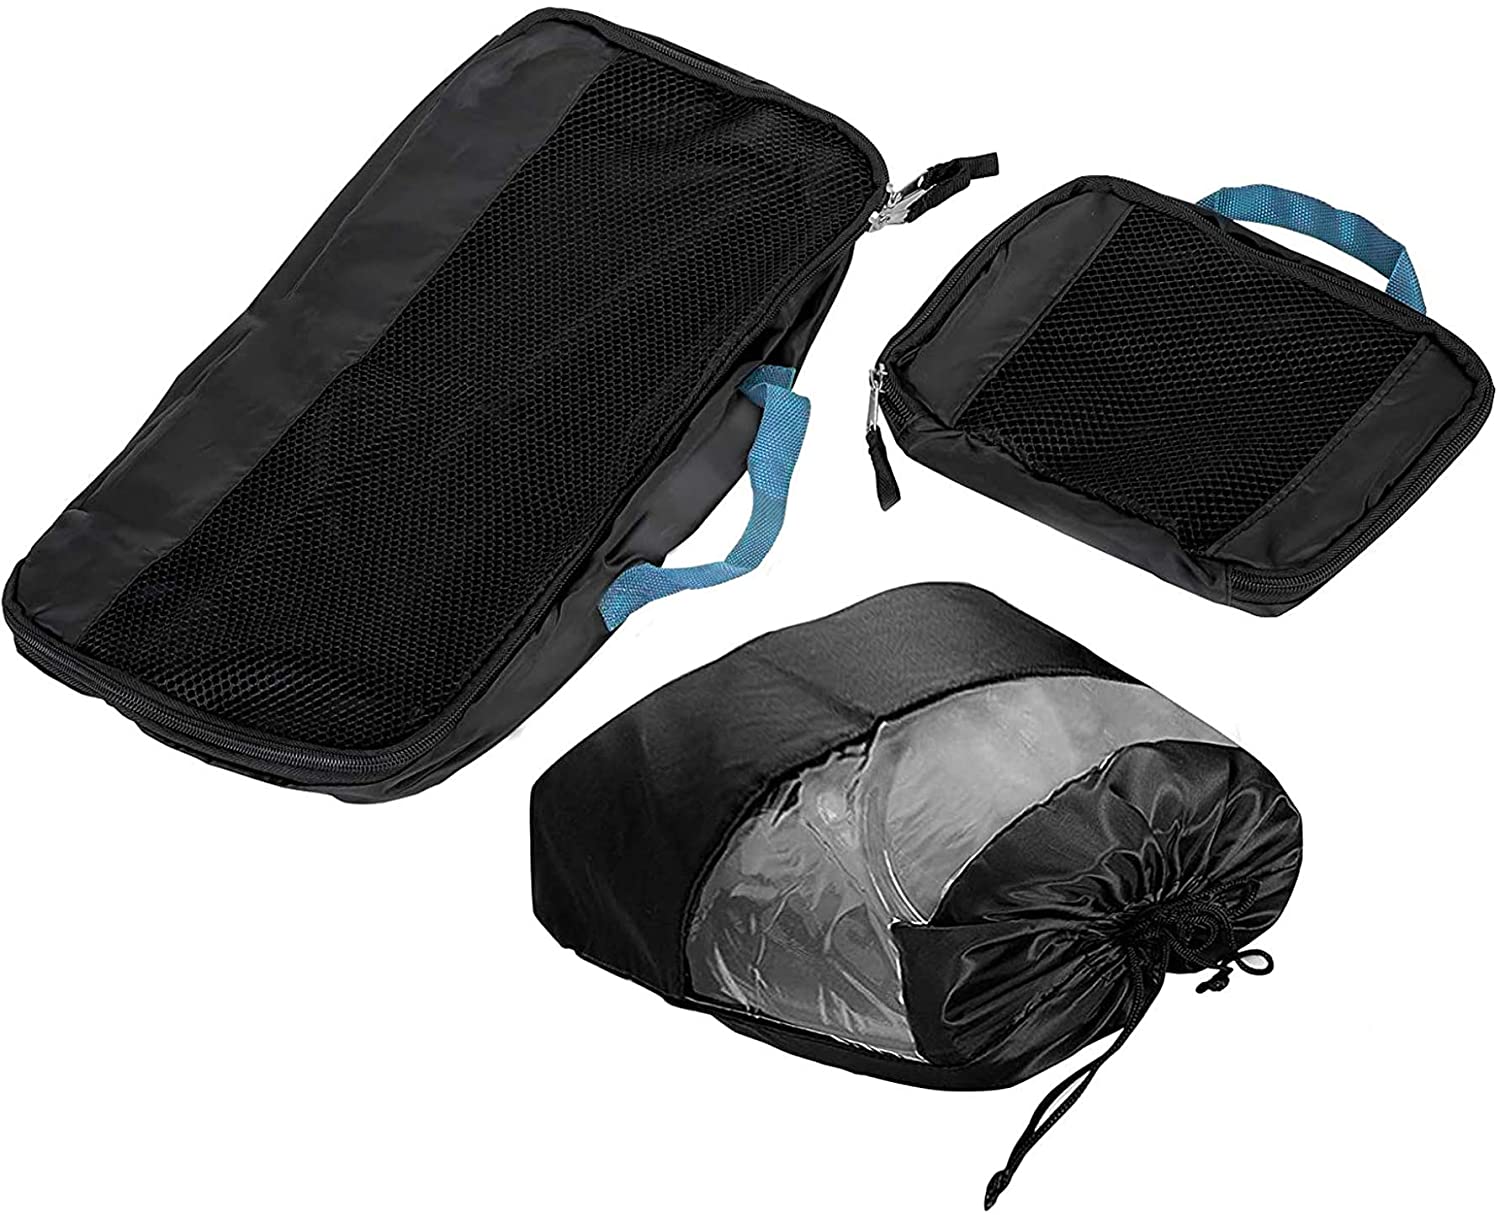 Mesh Travel And Shoe Bag 3 Piece Set - Smart Design® 3